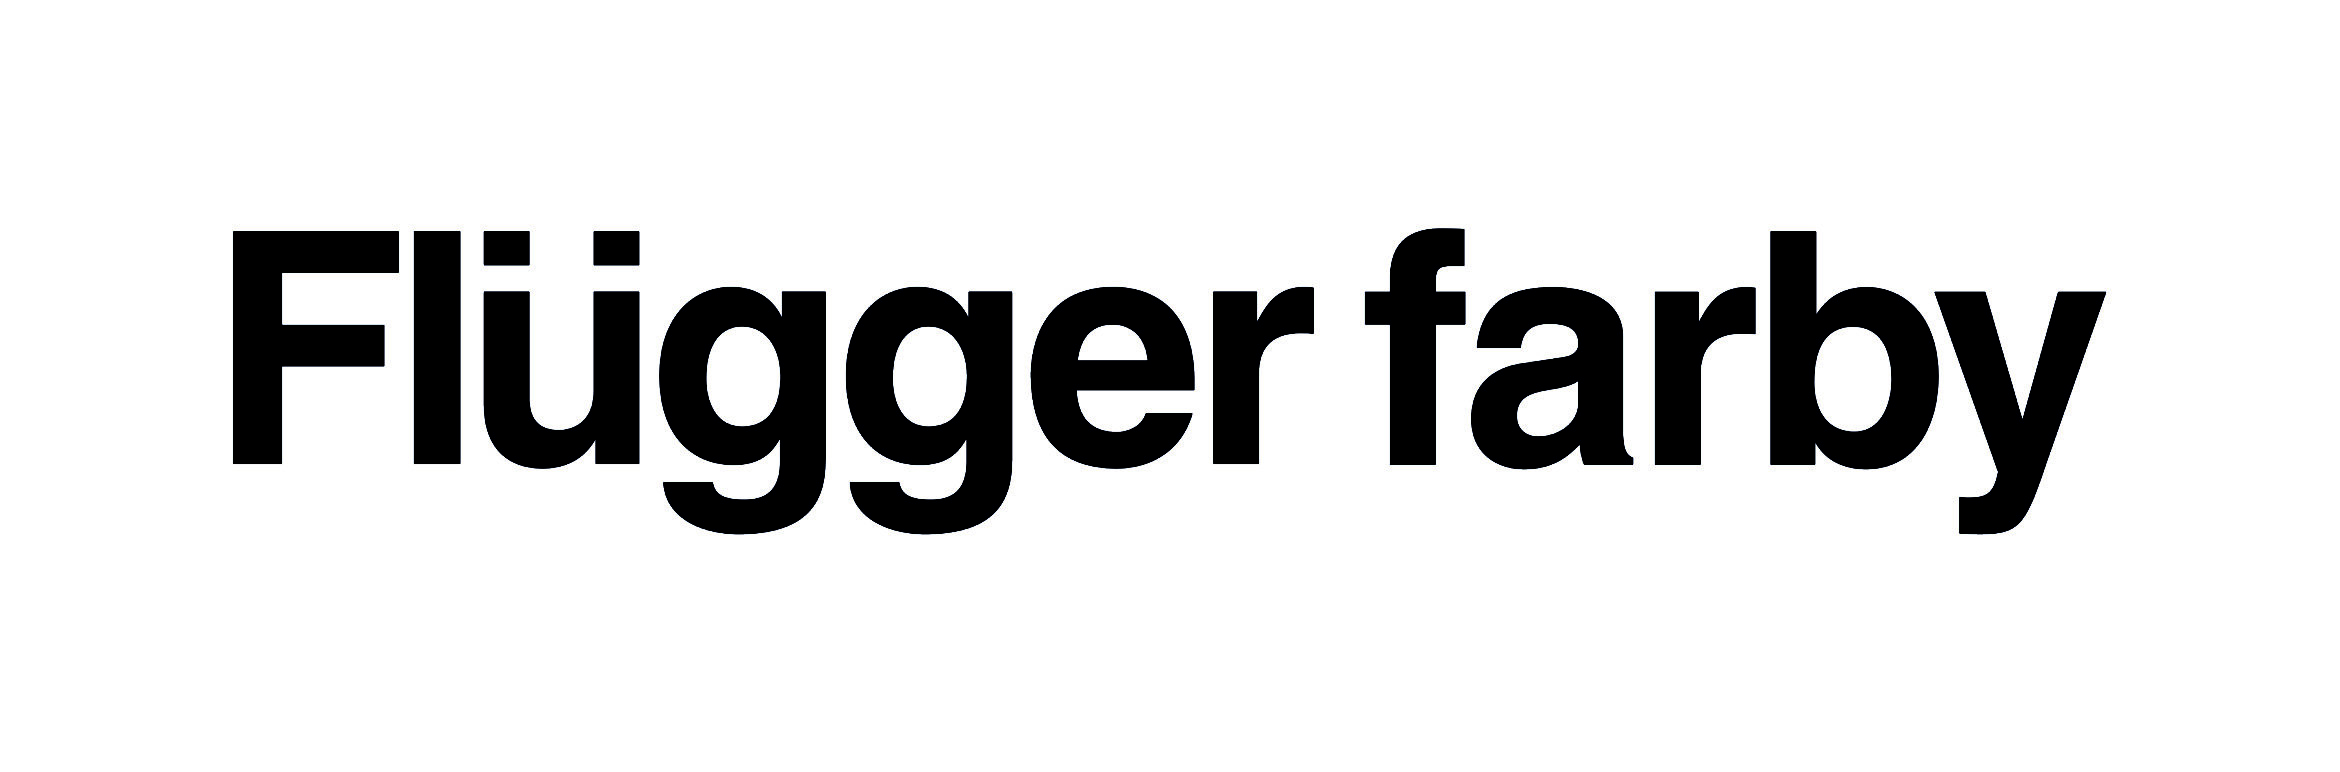 Fluggerfarby_logo_new_CMYK_duze_pole.jpg